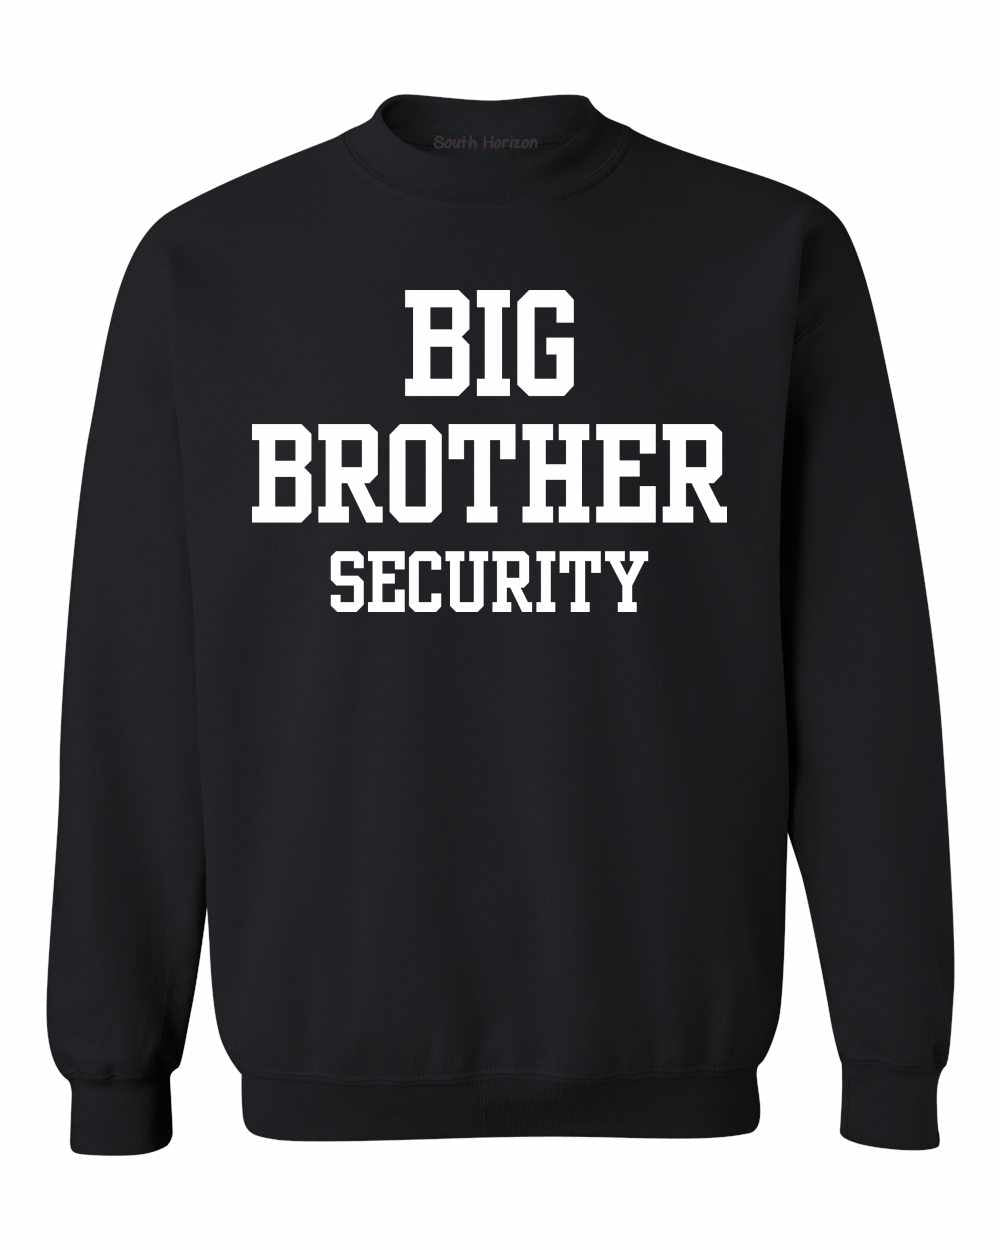 Big Brother Security on SweatShirt